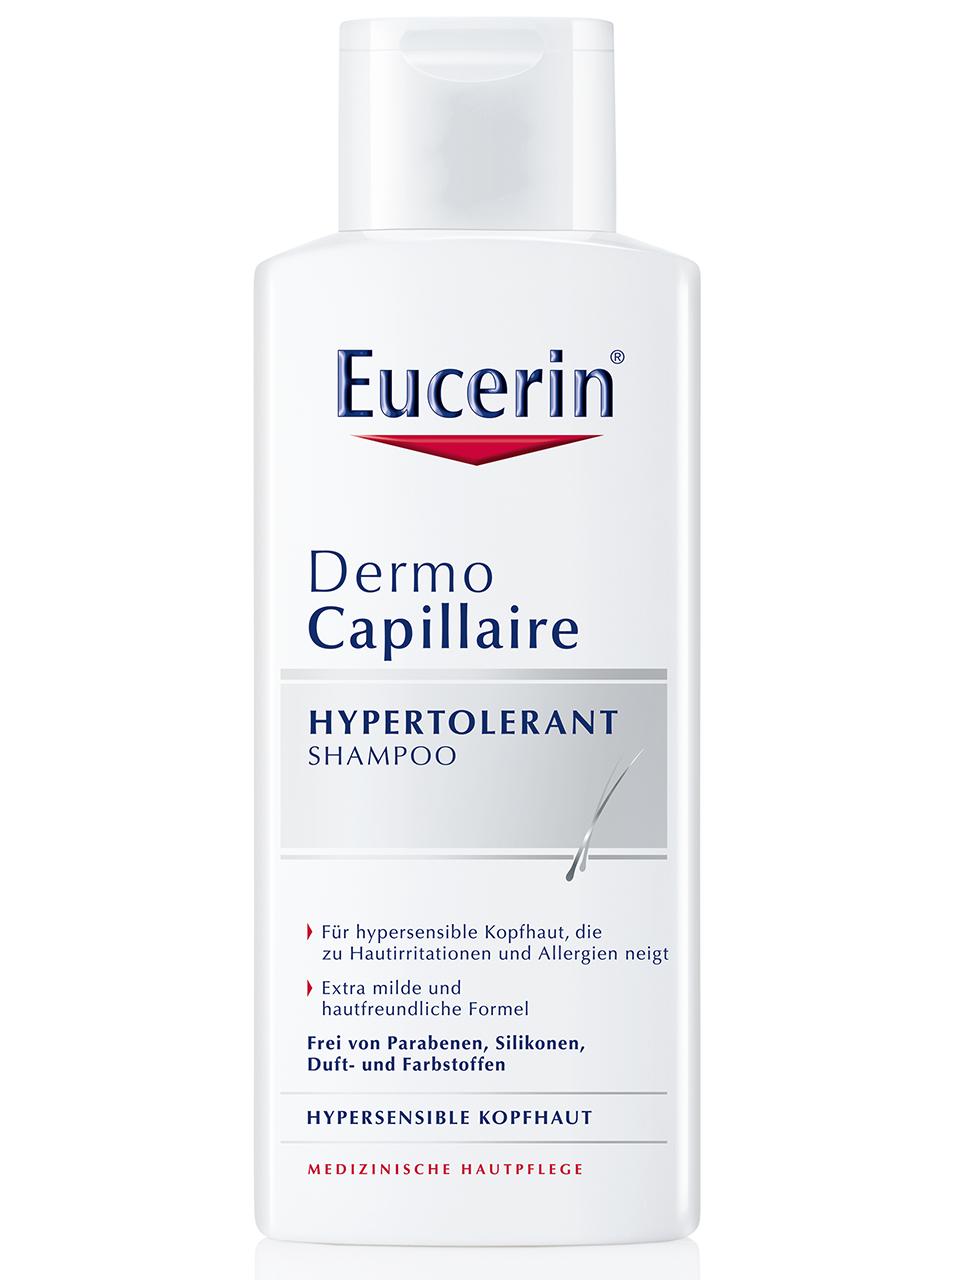 Eucerin DermoCapillaire Shampoo Hypotolerant